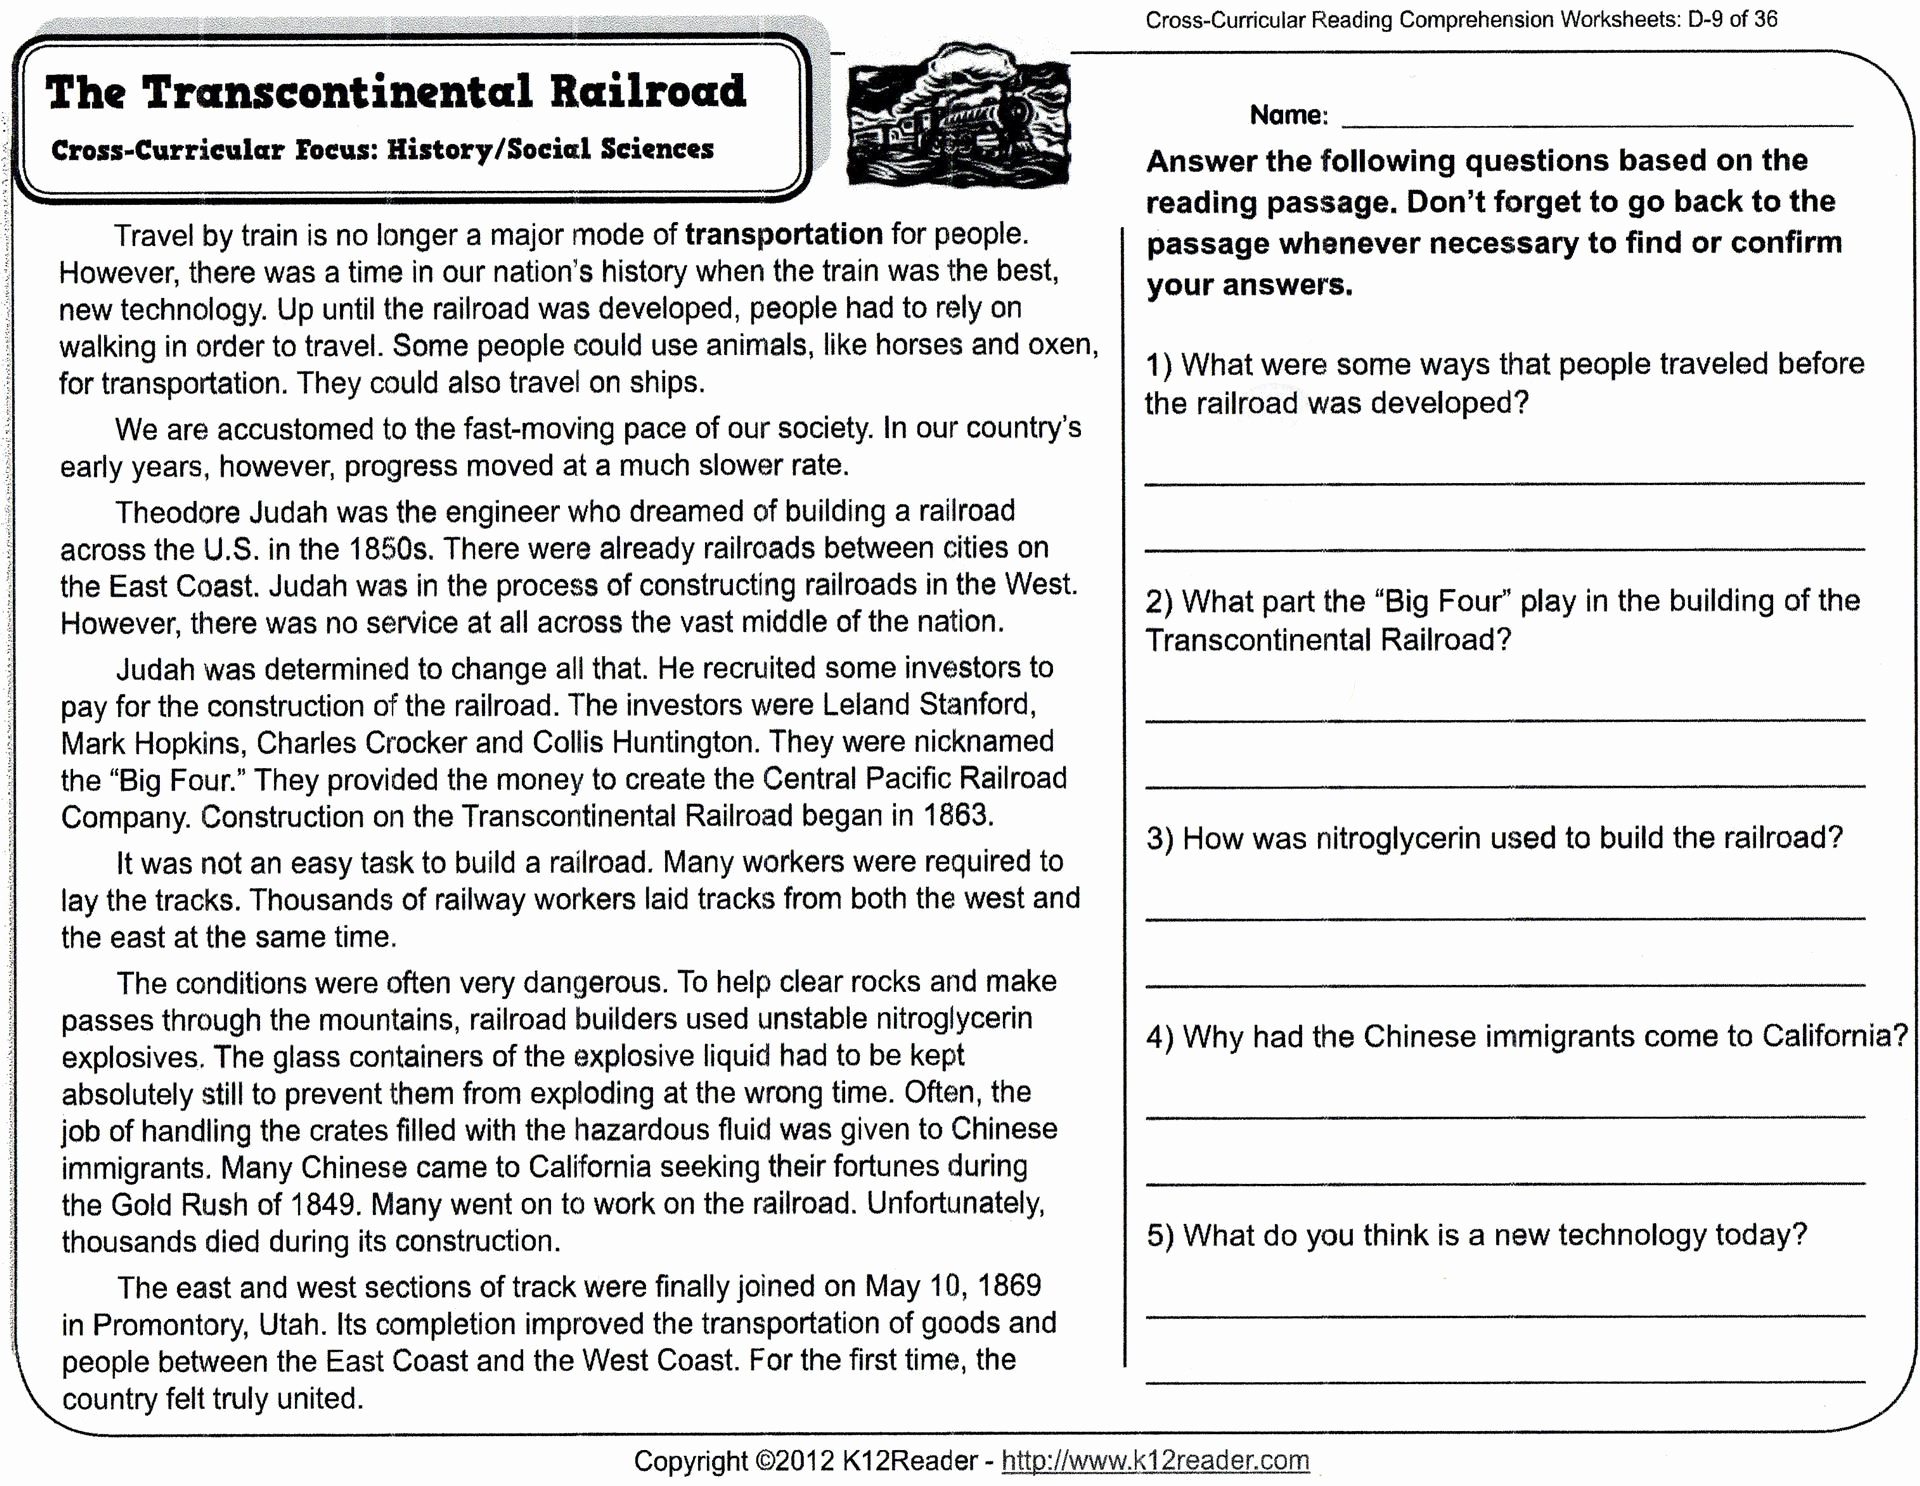 Reading Comprehension Worksheets 5th Grade Pdf Free Download